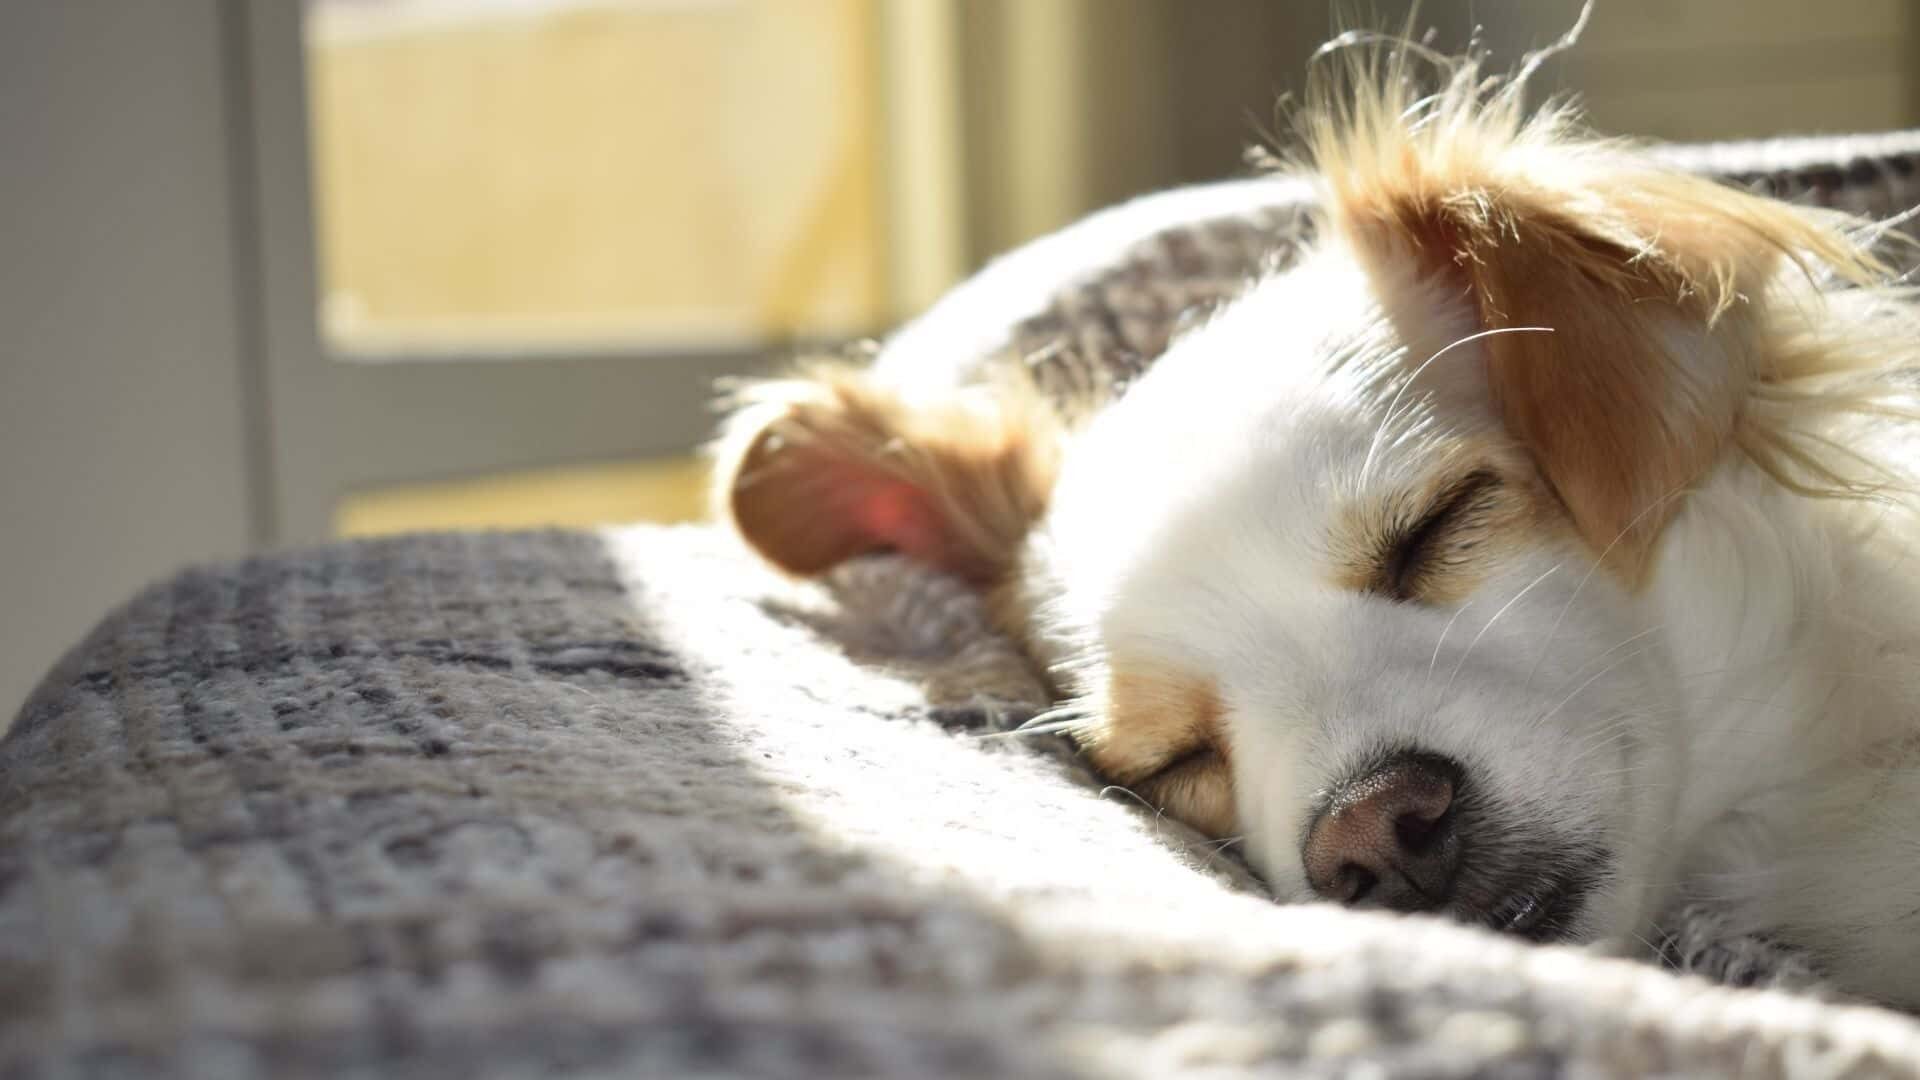 Do dogs pee in their sleep?